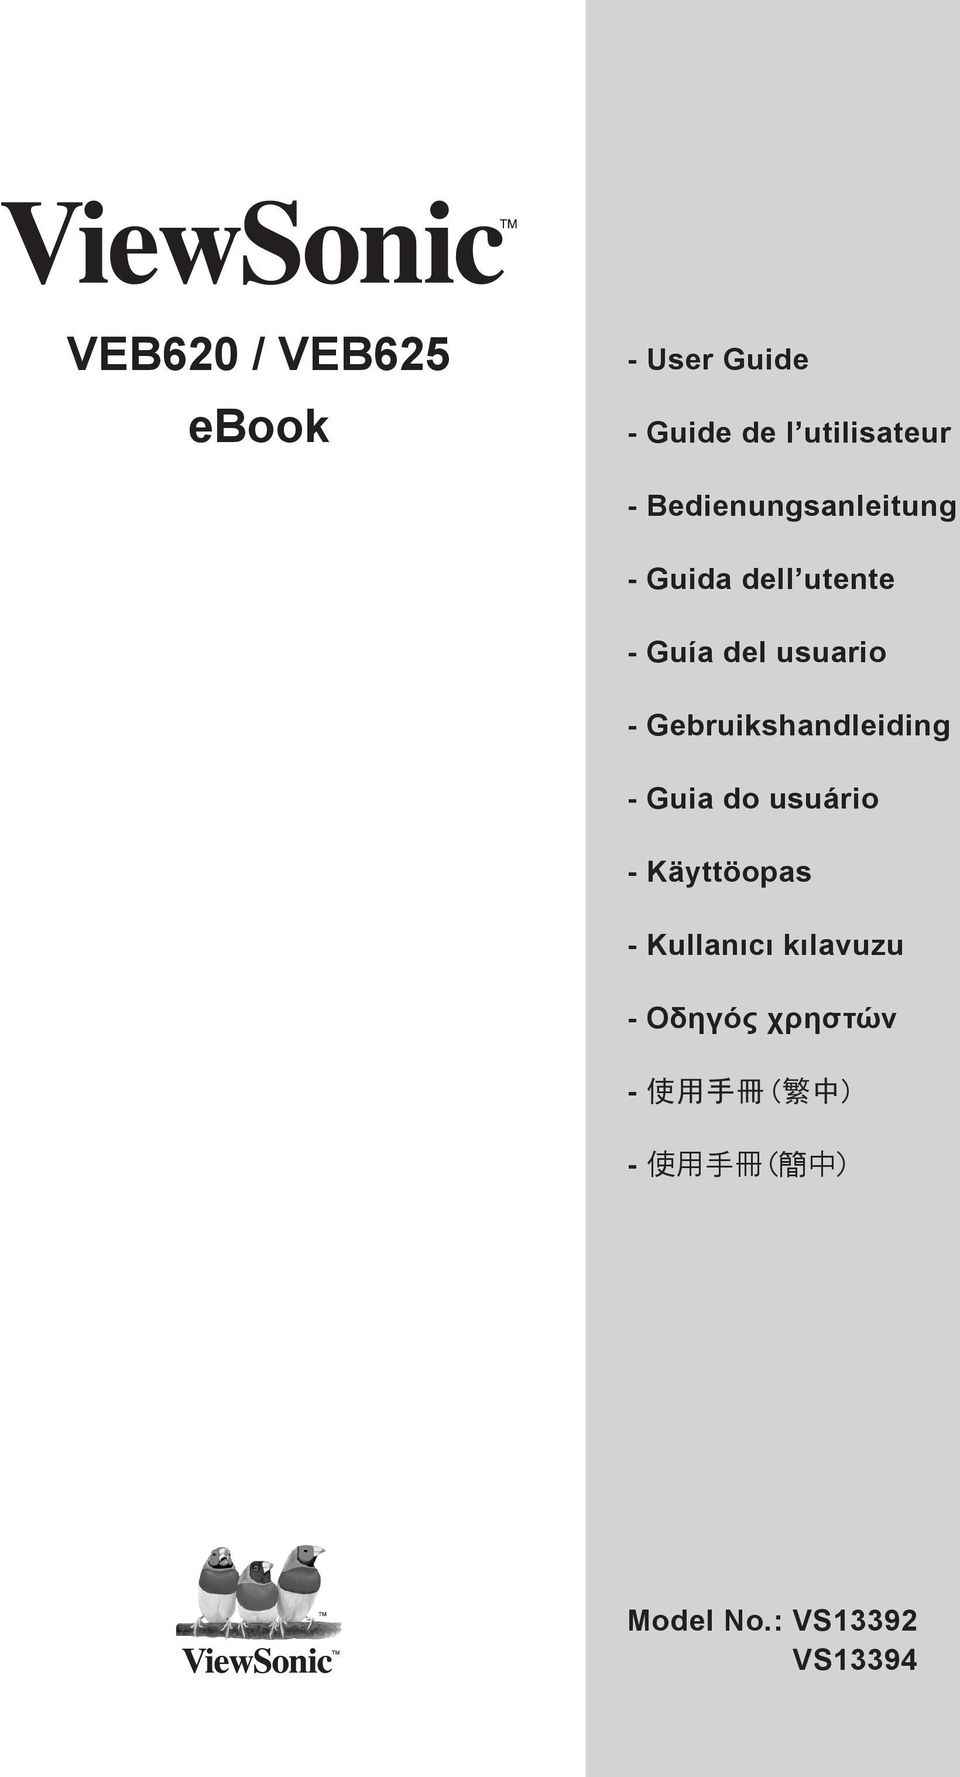 Gebruikshandleiding - Guia do usuário - Käyttöopas - Kullanιcι